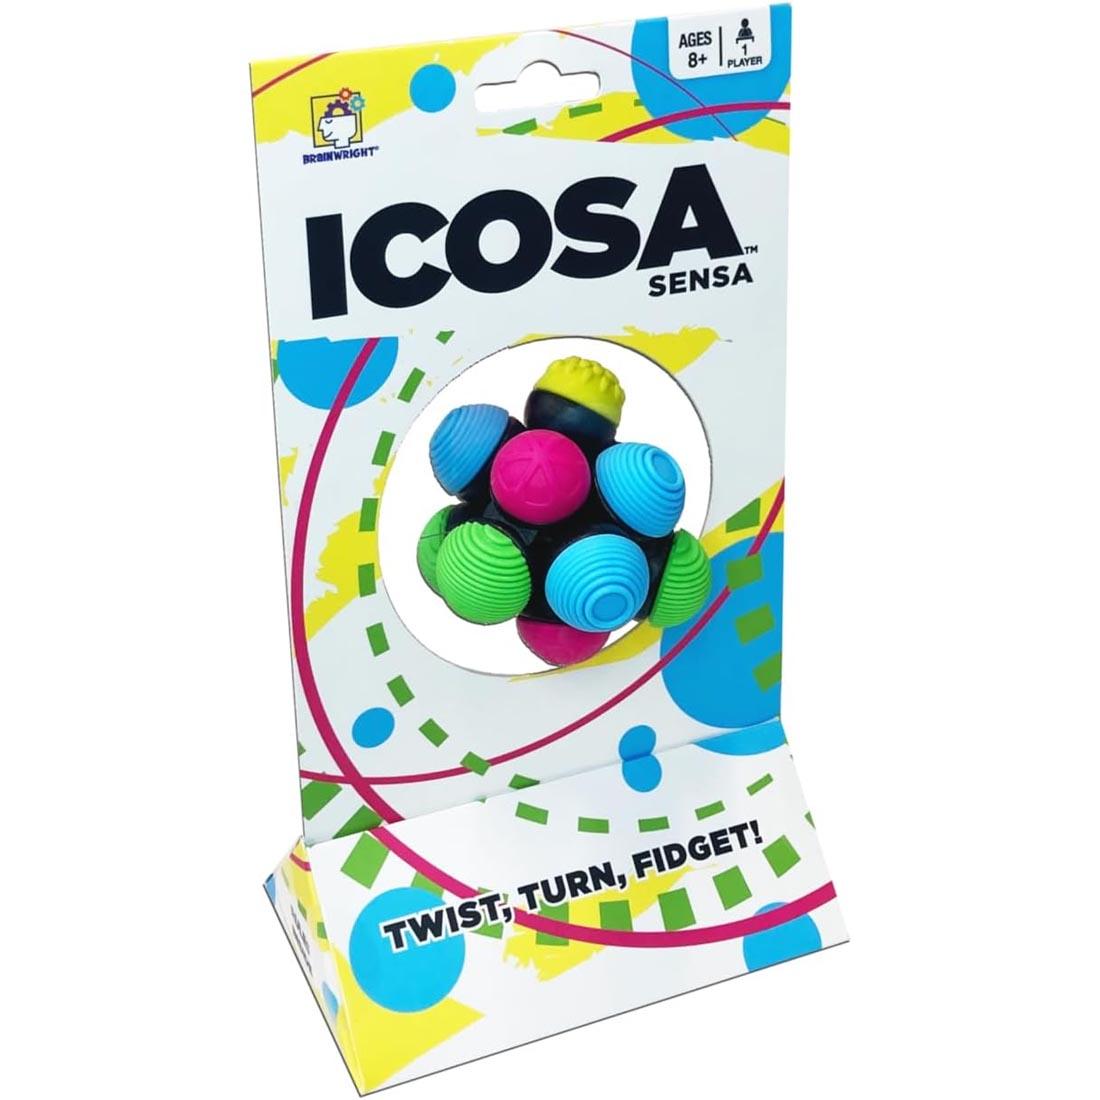 Icosa Sensa Fidget Ball in package